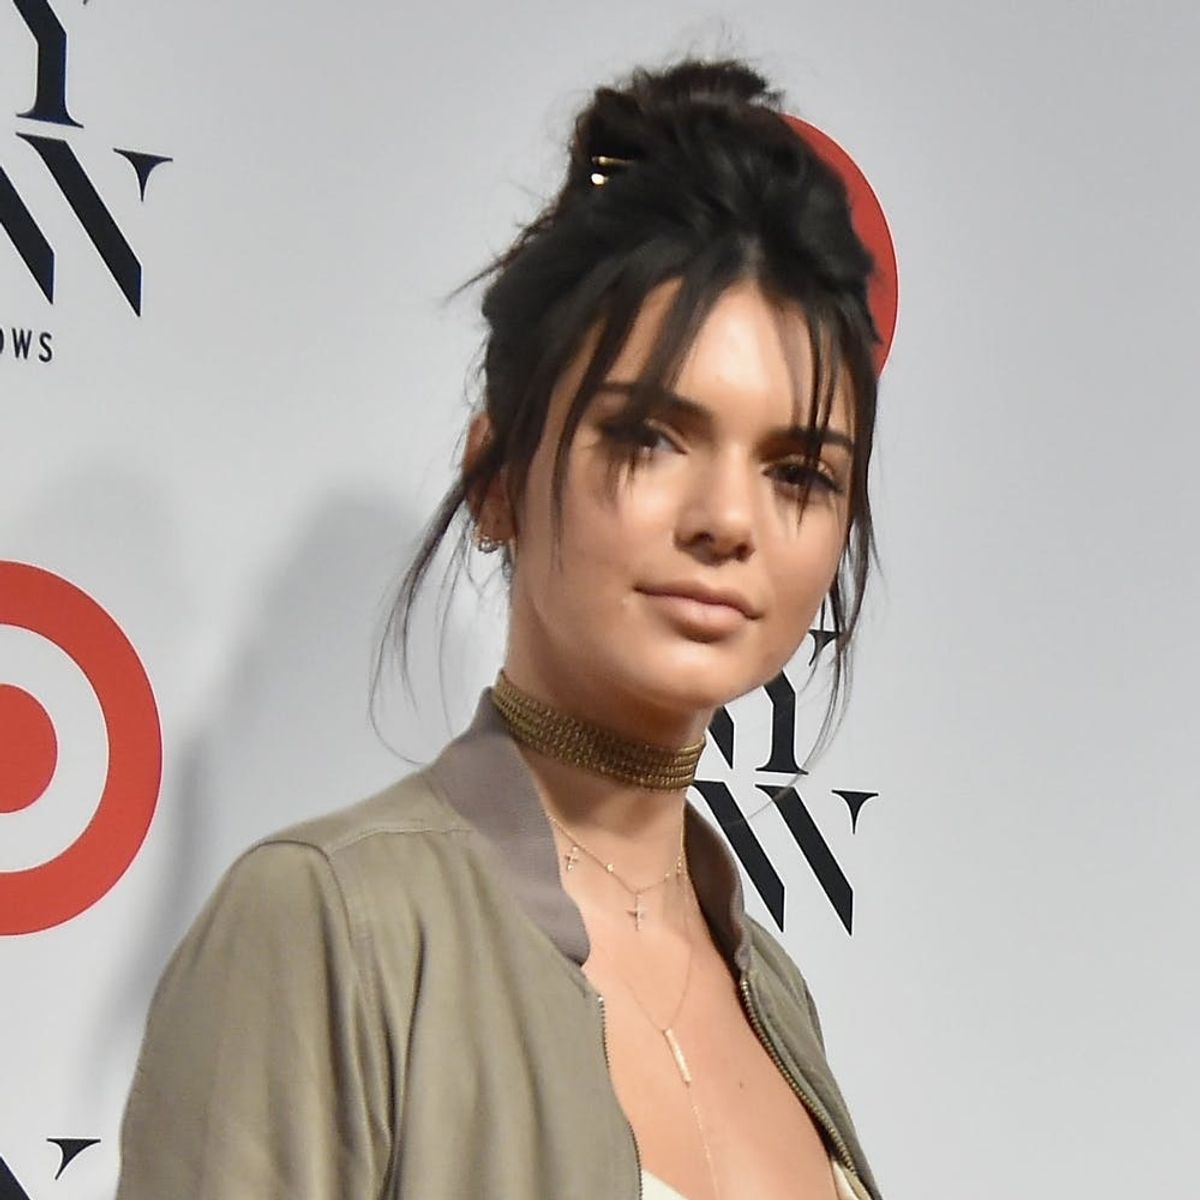 Kendall Jenner’s Vogue Shoot Has Dancers Fuming